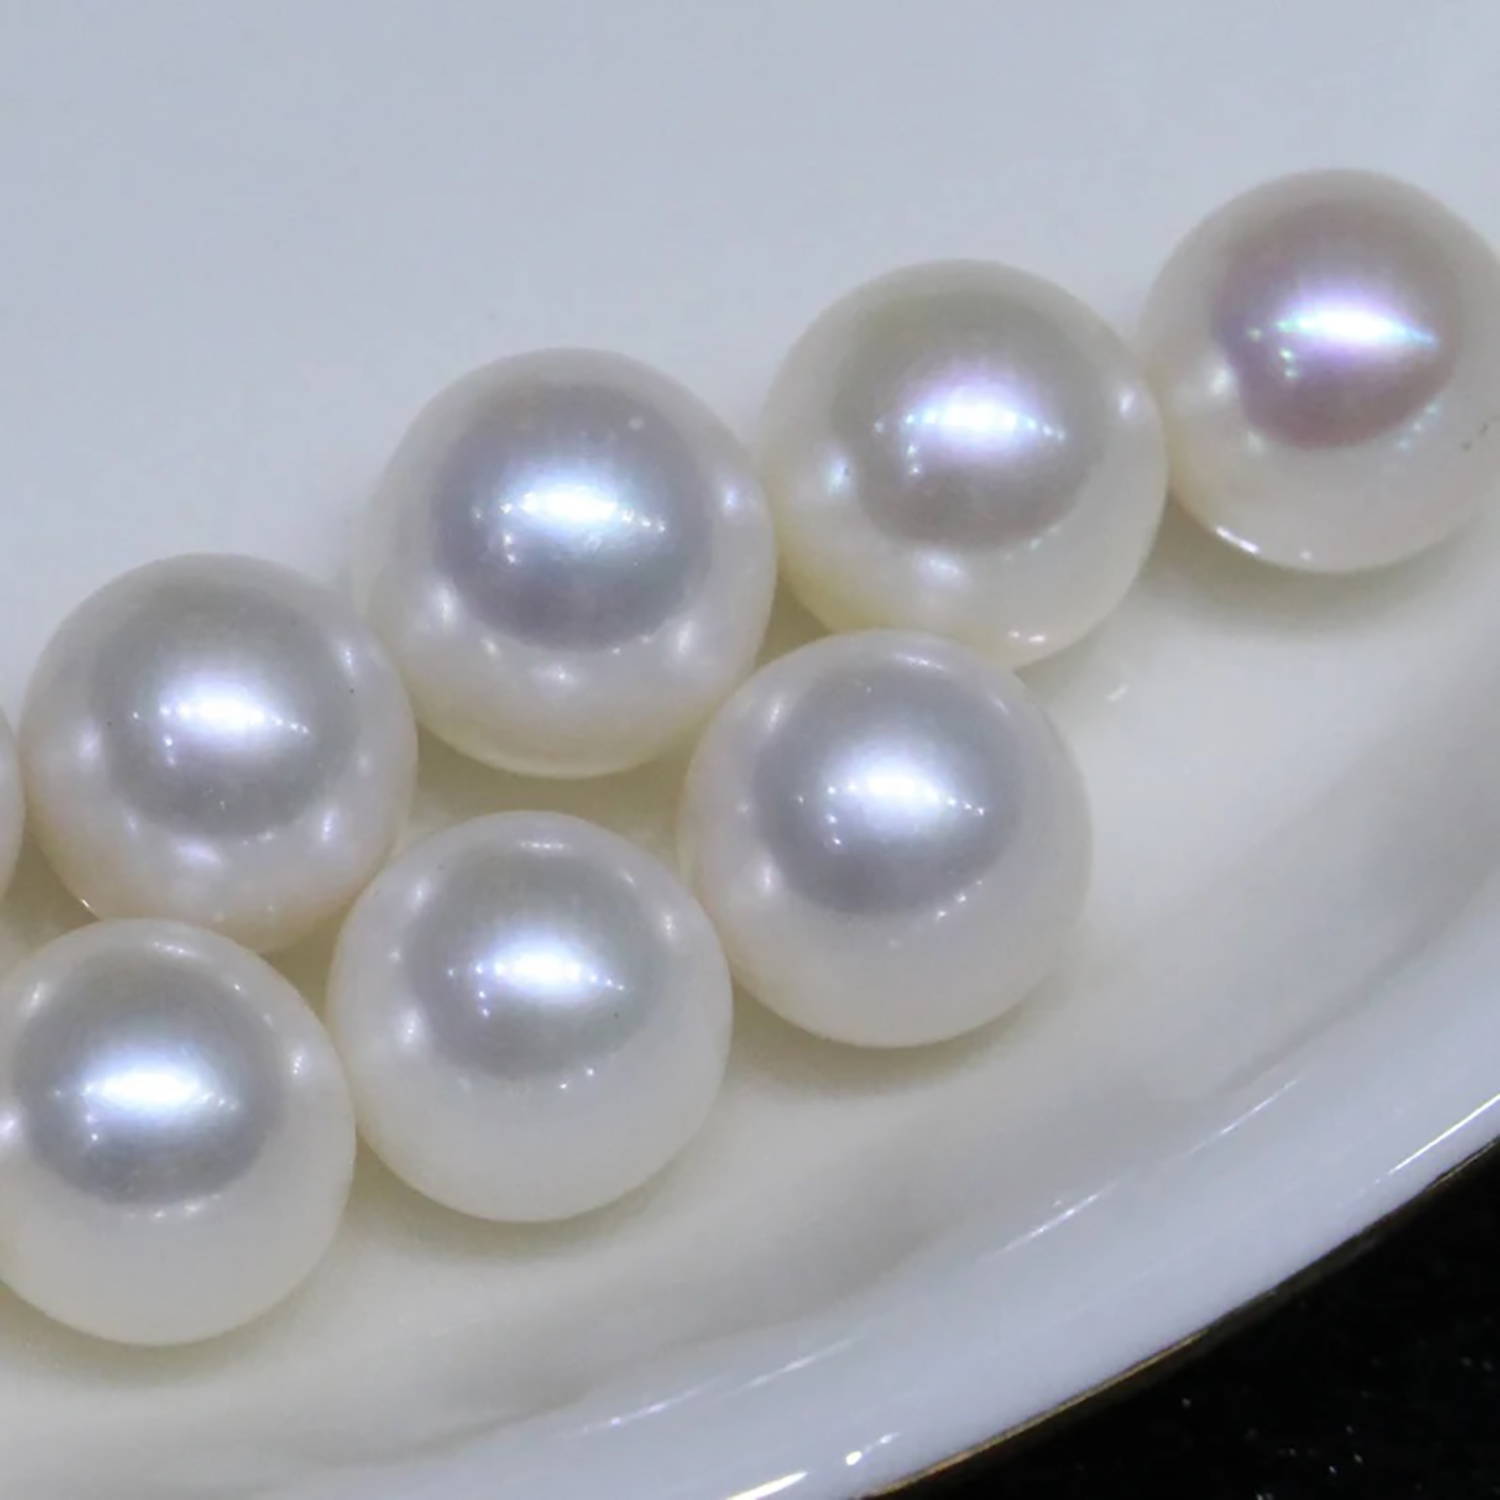 Gem Quality Freshwater Pearls vs Hanadama Pearls